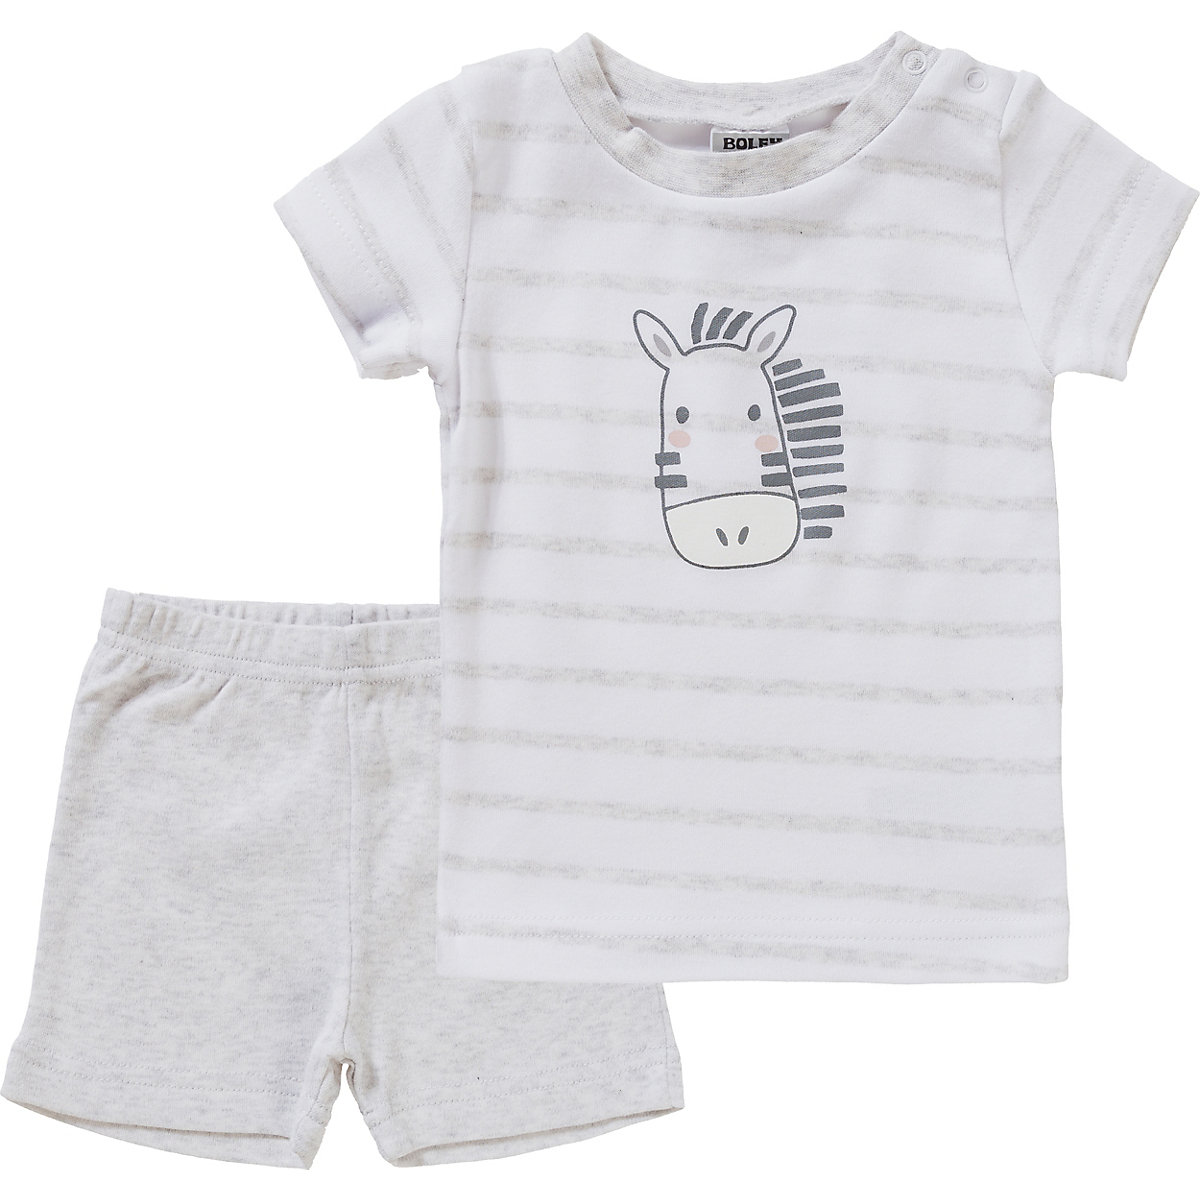 Boley Baby Set T-Shirt + Shorts weiß-kombi